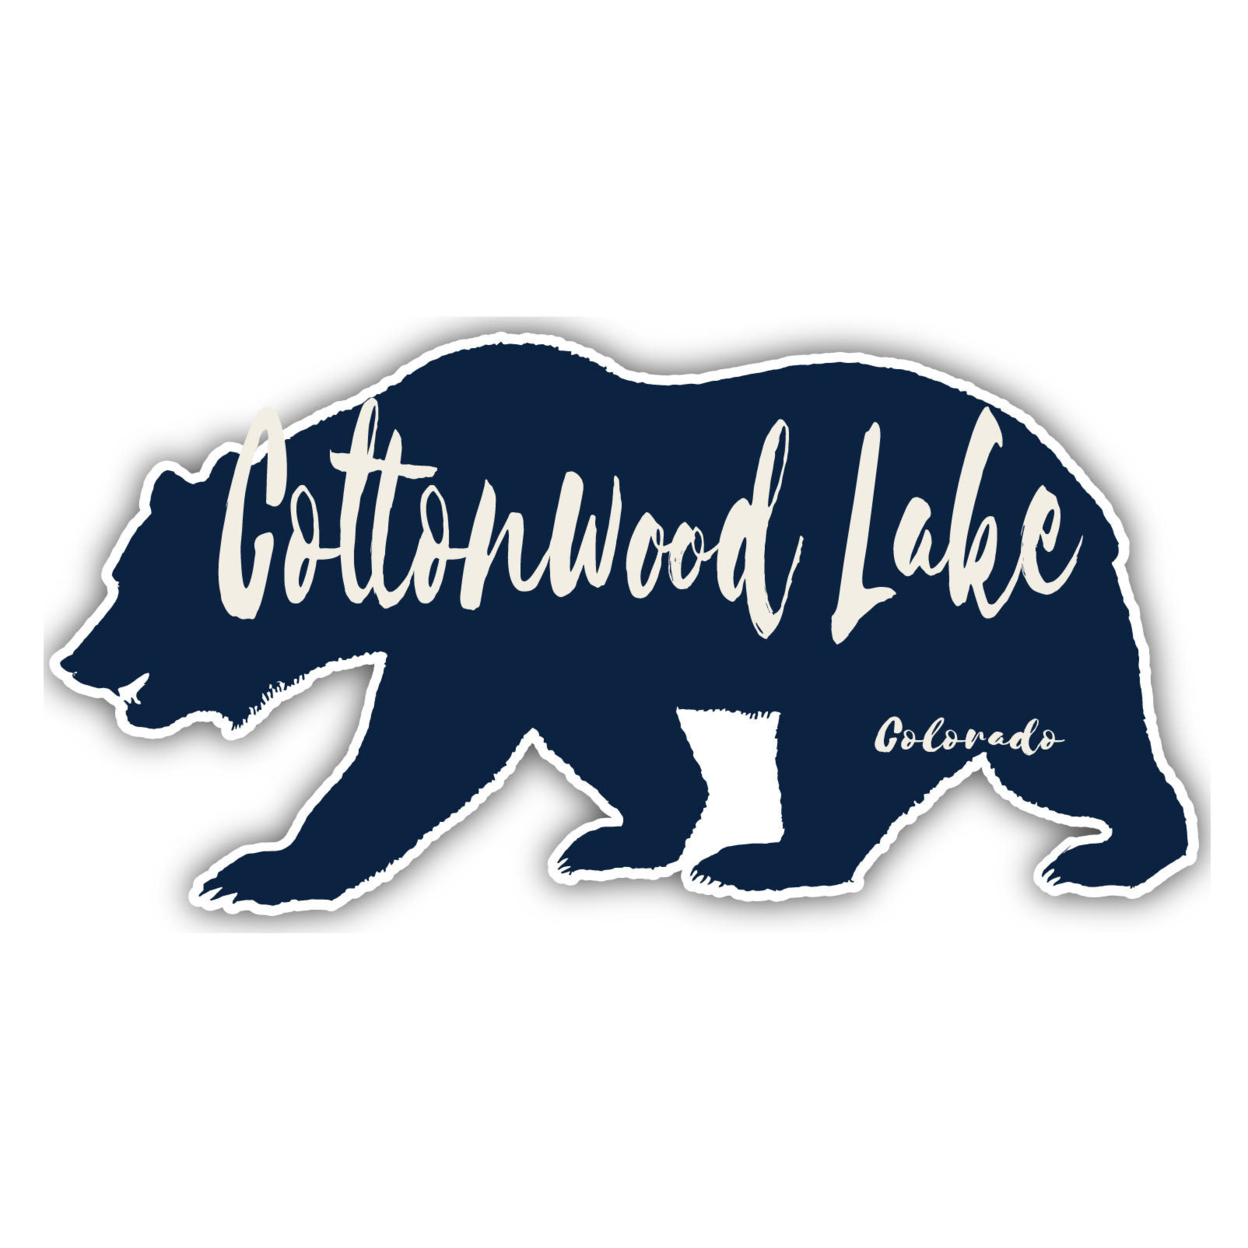 Cottonwood Lake Colorado Souvenir Decorative Stickers (Choose Theme And Size) - Single Unit, 6-Inch, Bear